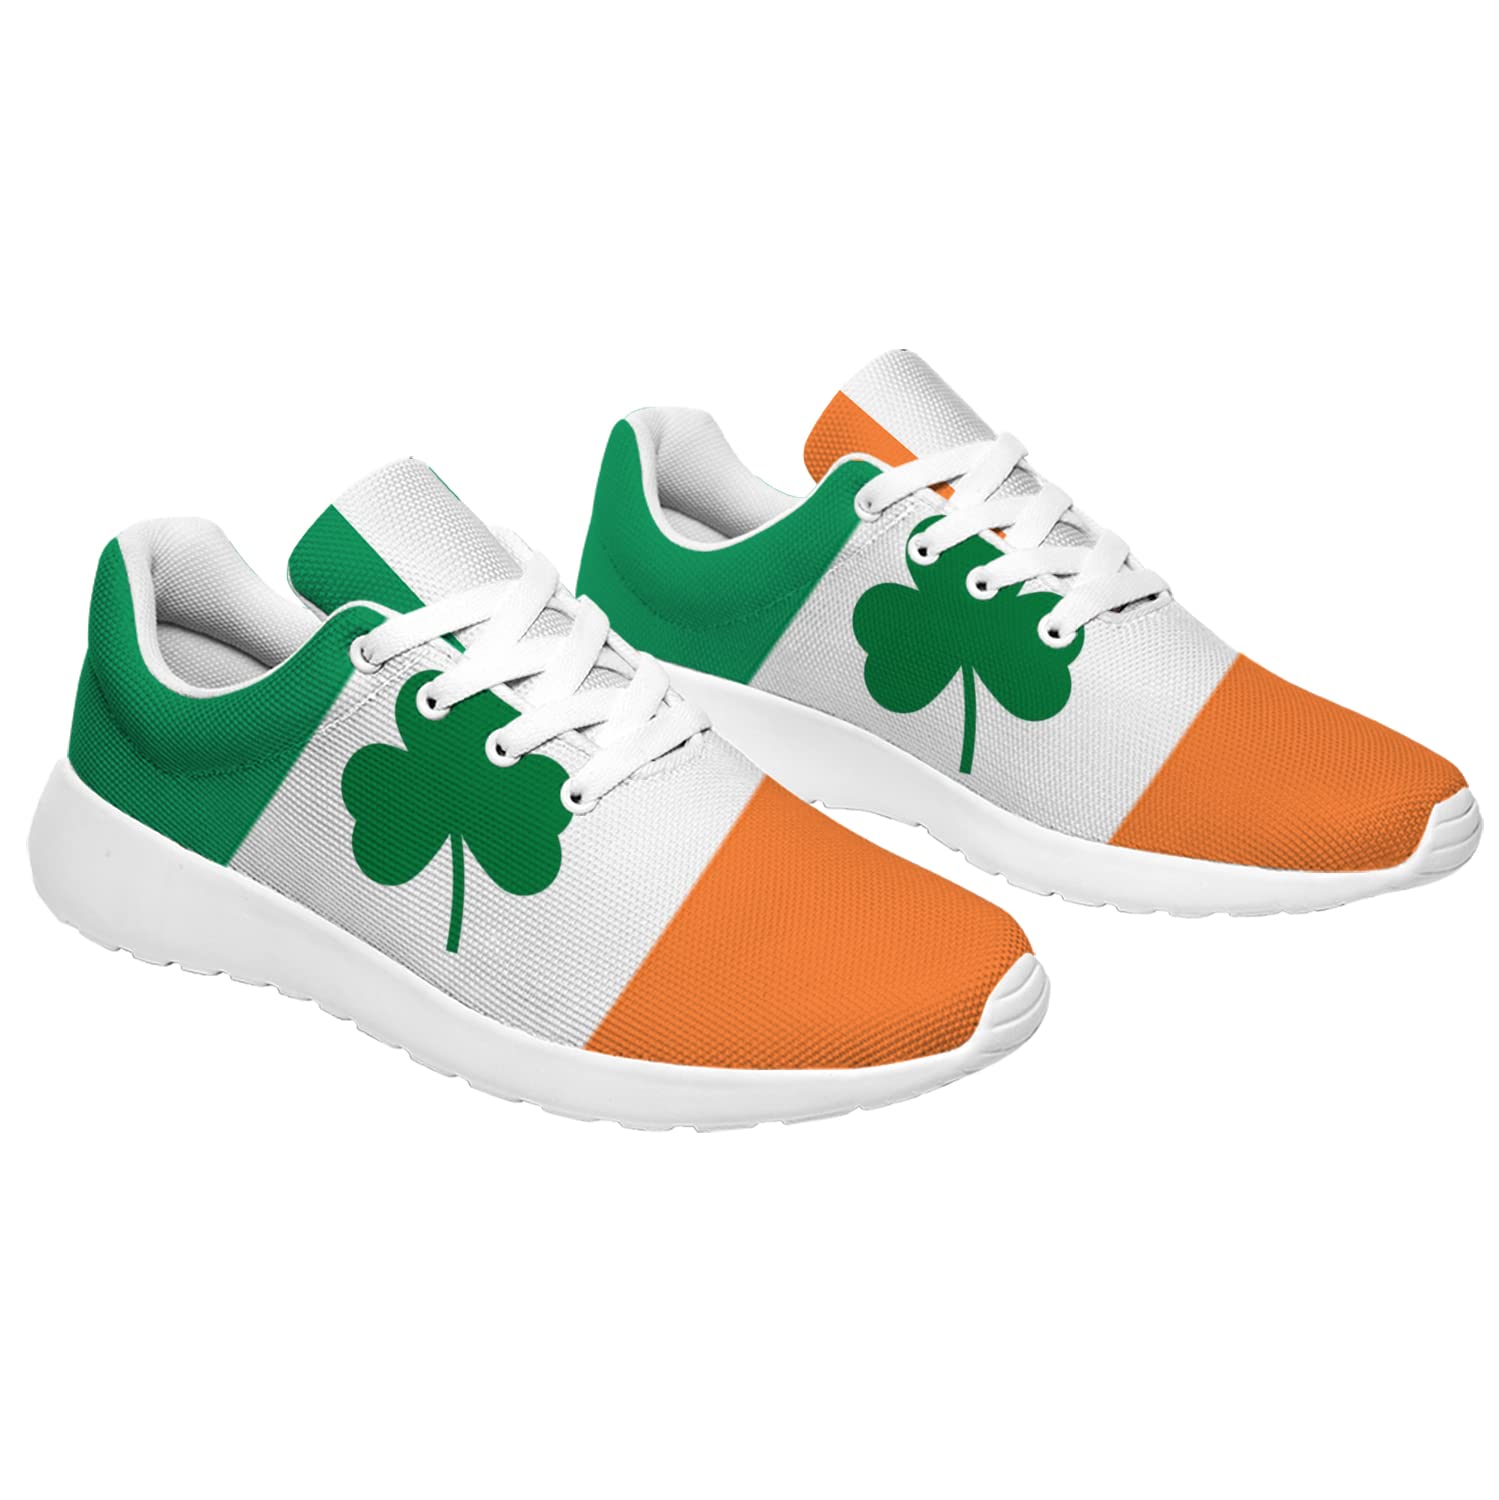 St. Patrick's Day Irish Flag Shamrock Shoes for Men Women Running Sneaker Comfortable Lightweight Tennis Shoes Gifts for Sister,US Size 9.5 Women/8 Men